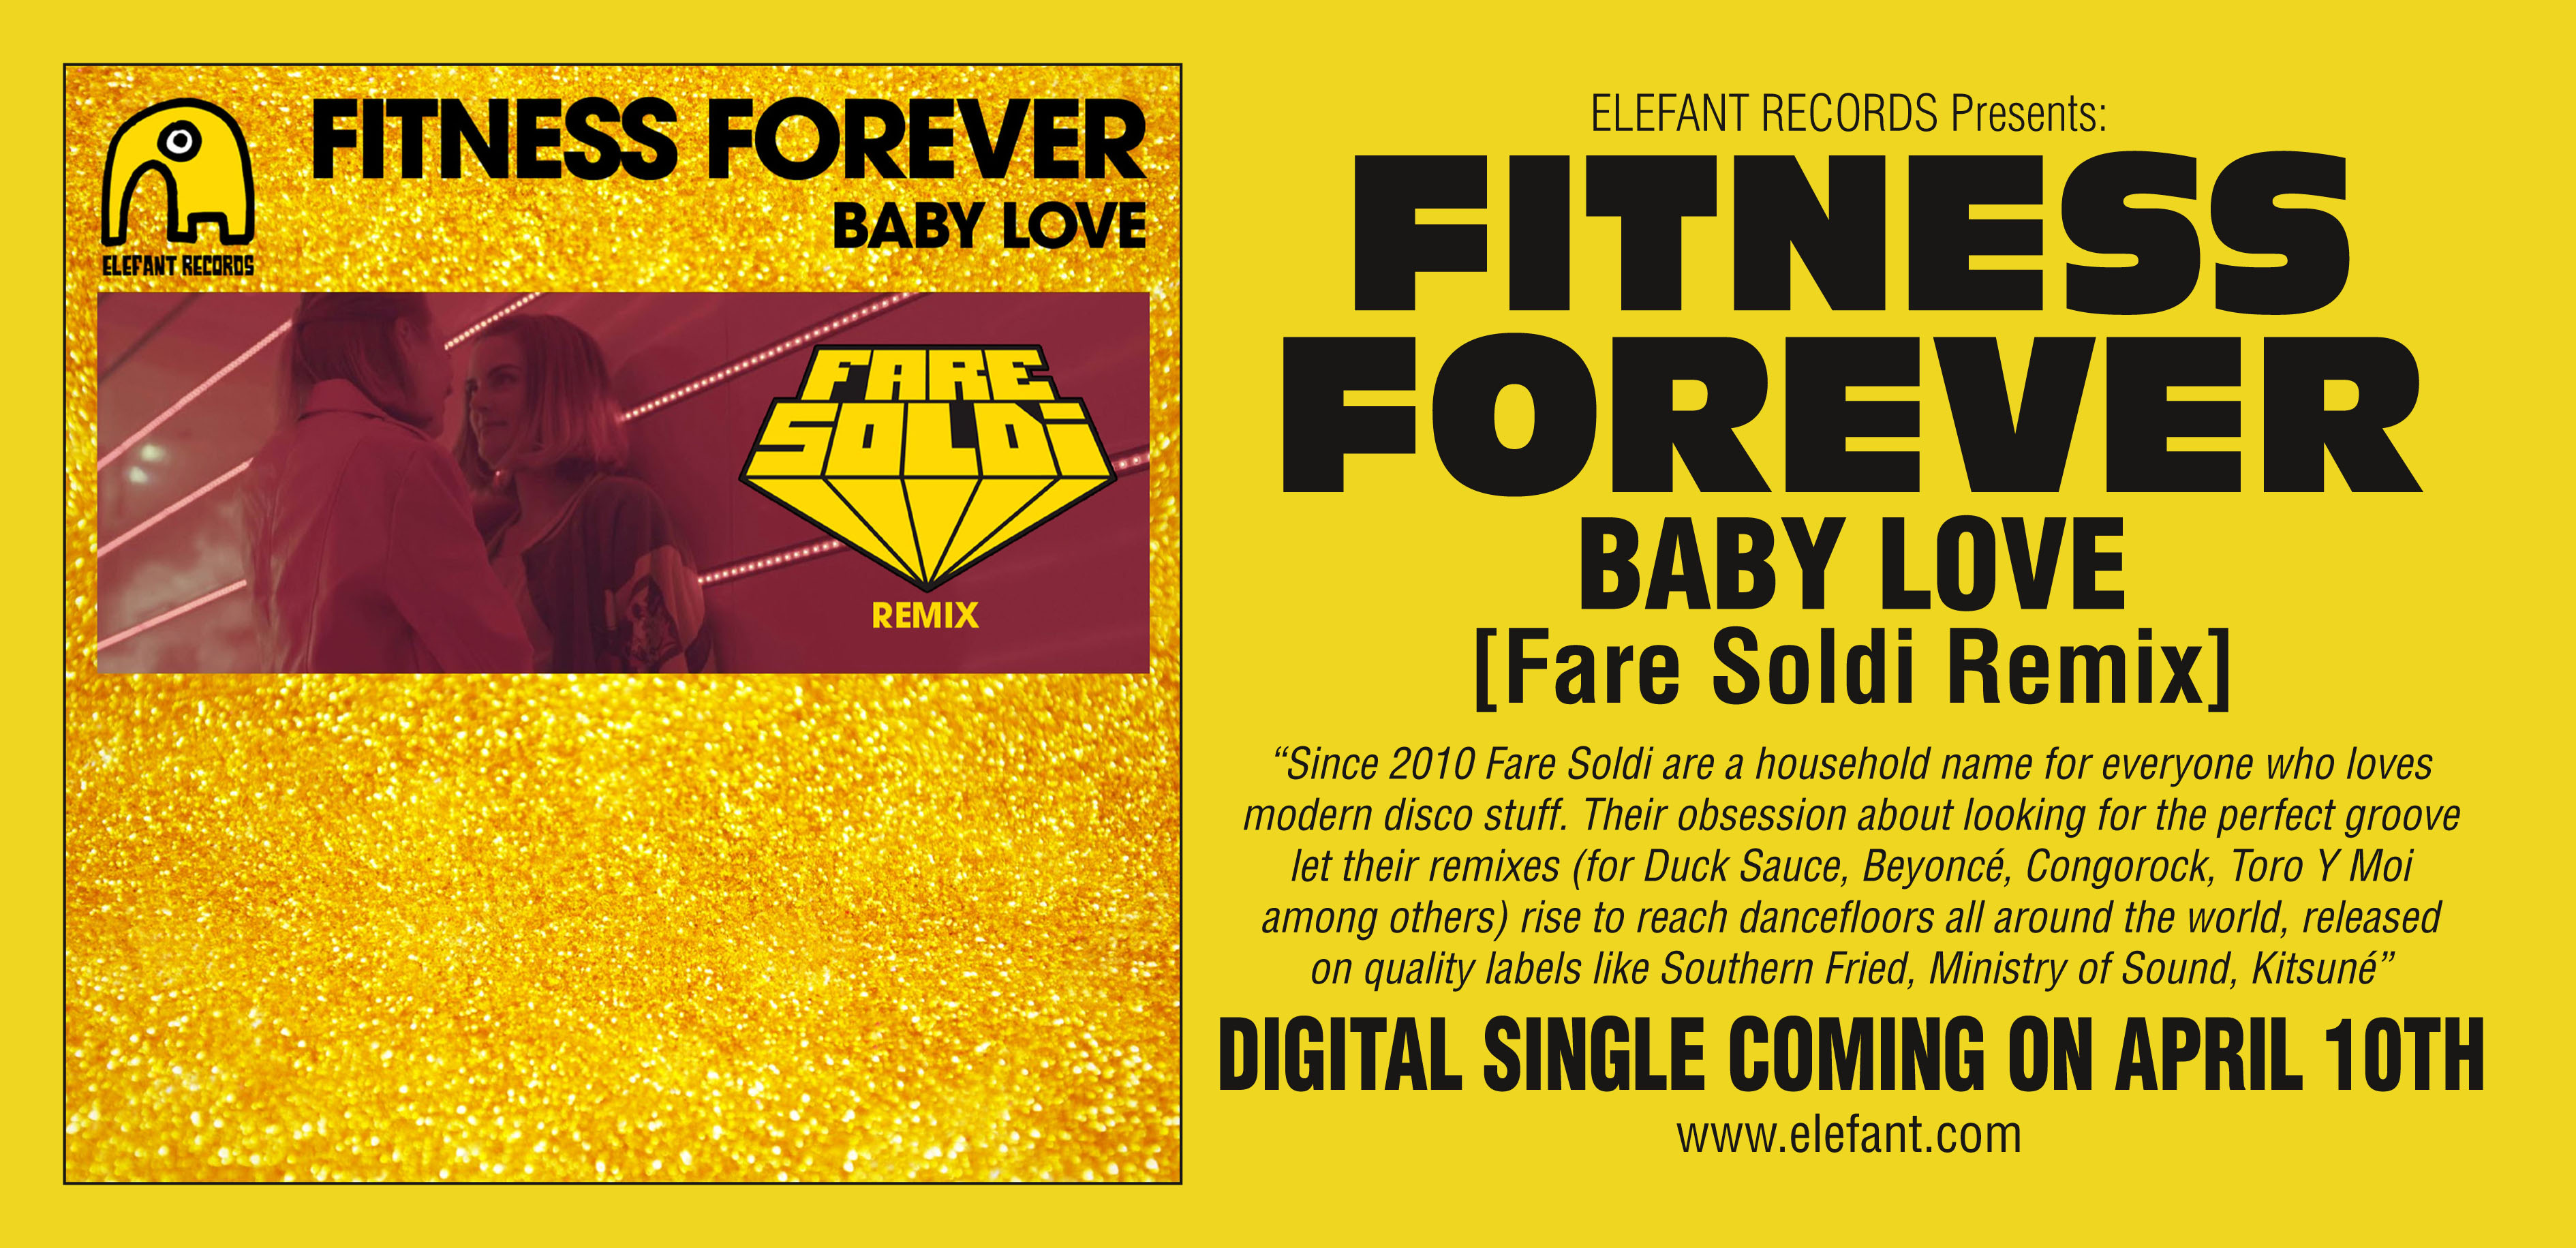 Fitness Forever "Baby Love"